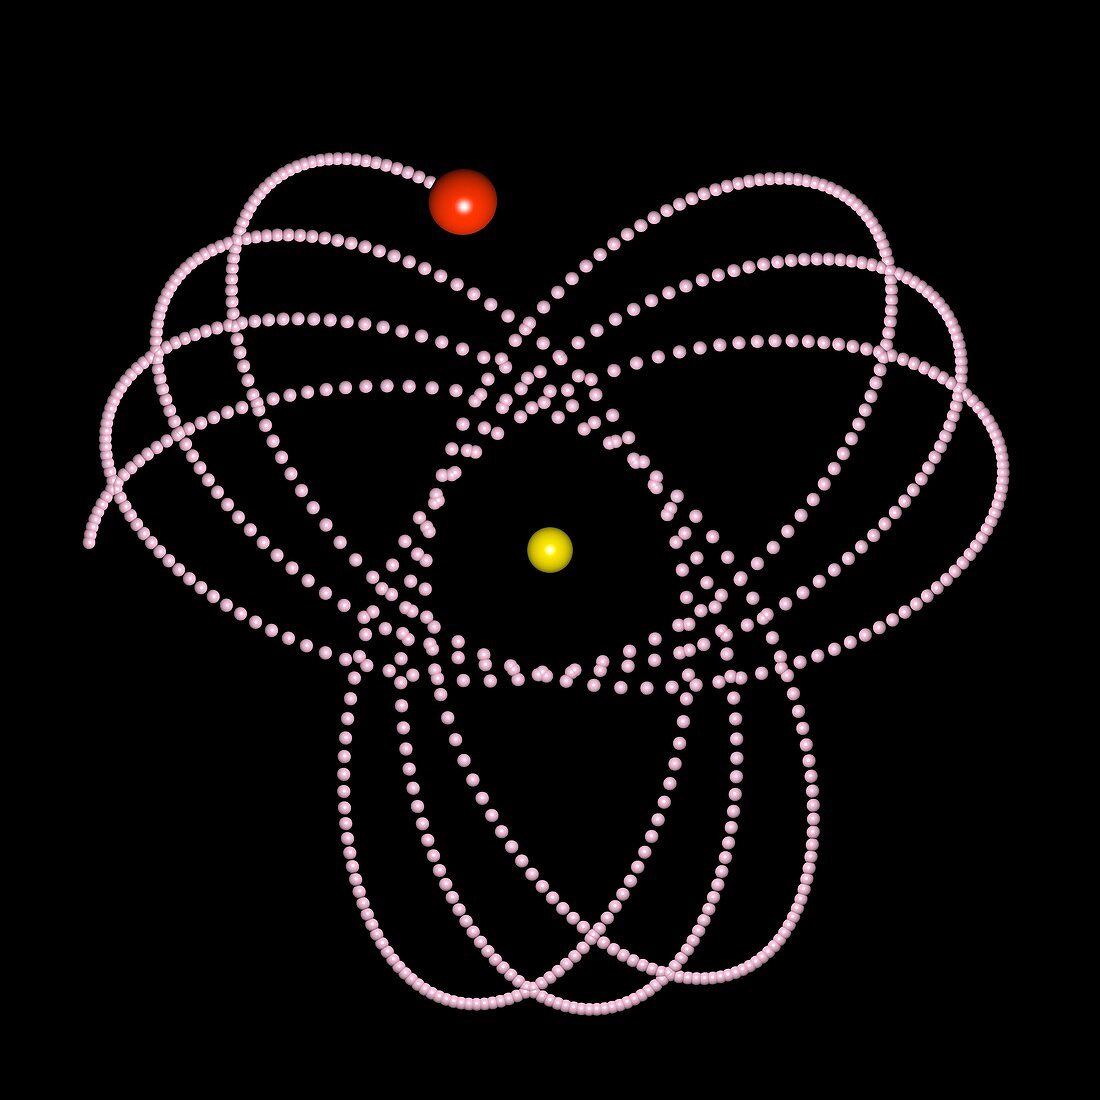 Rosetta orbit around black hole,artwork